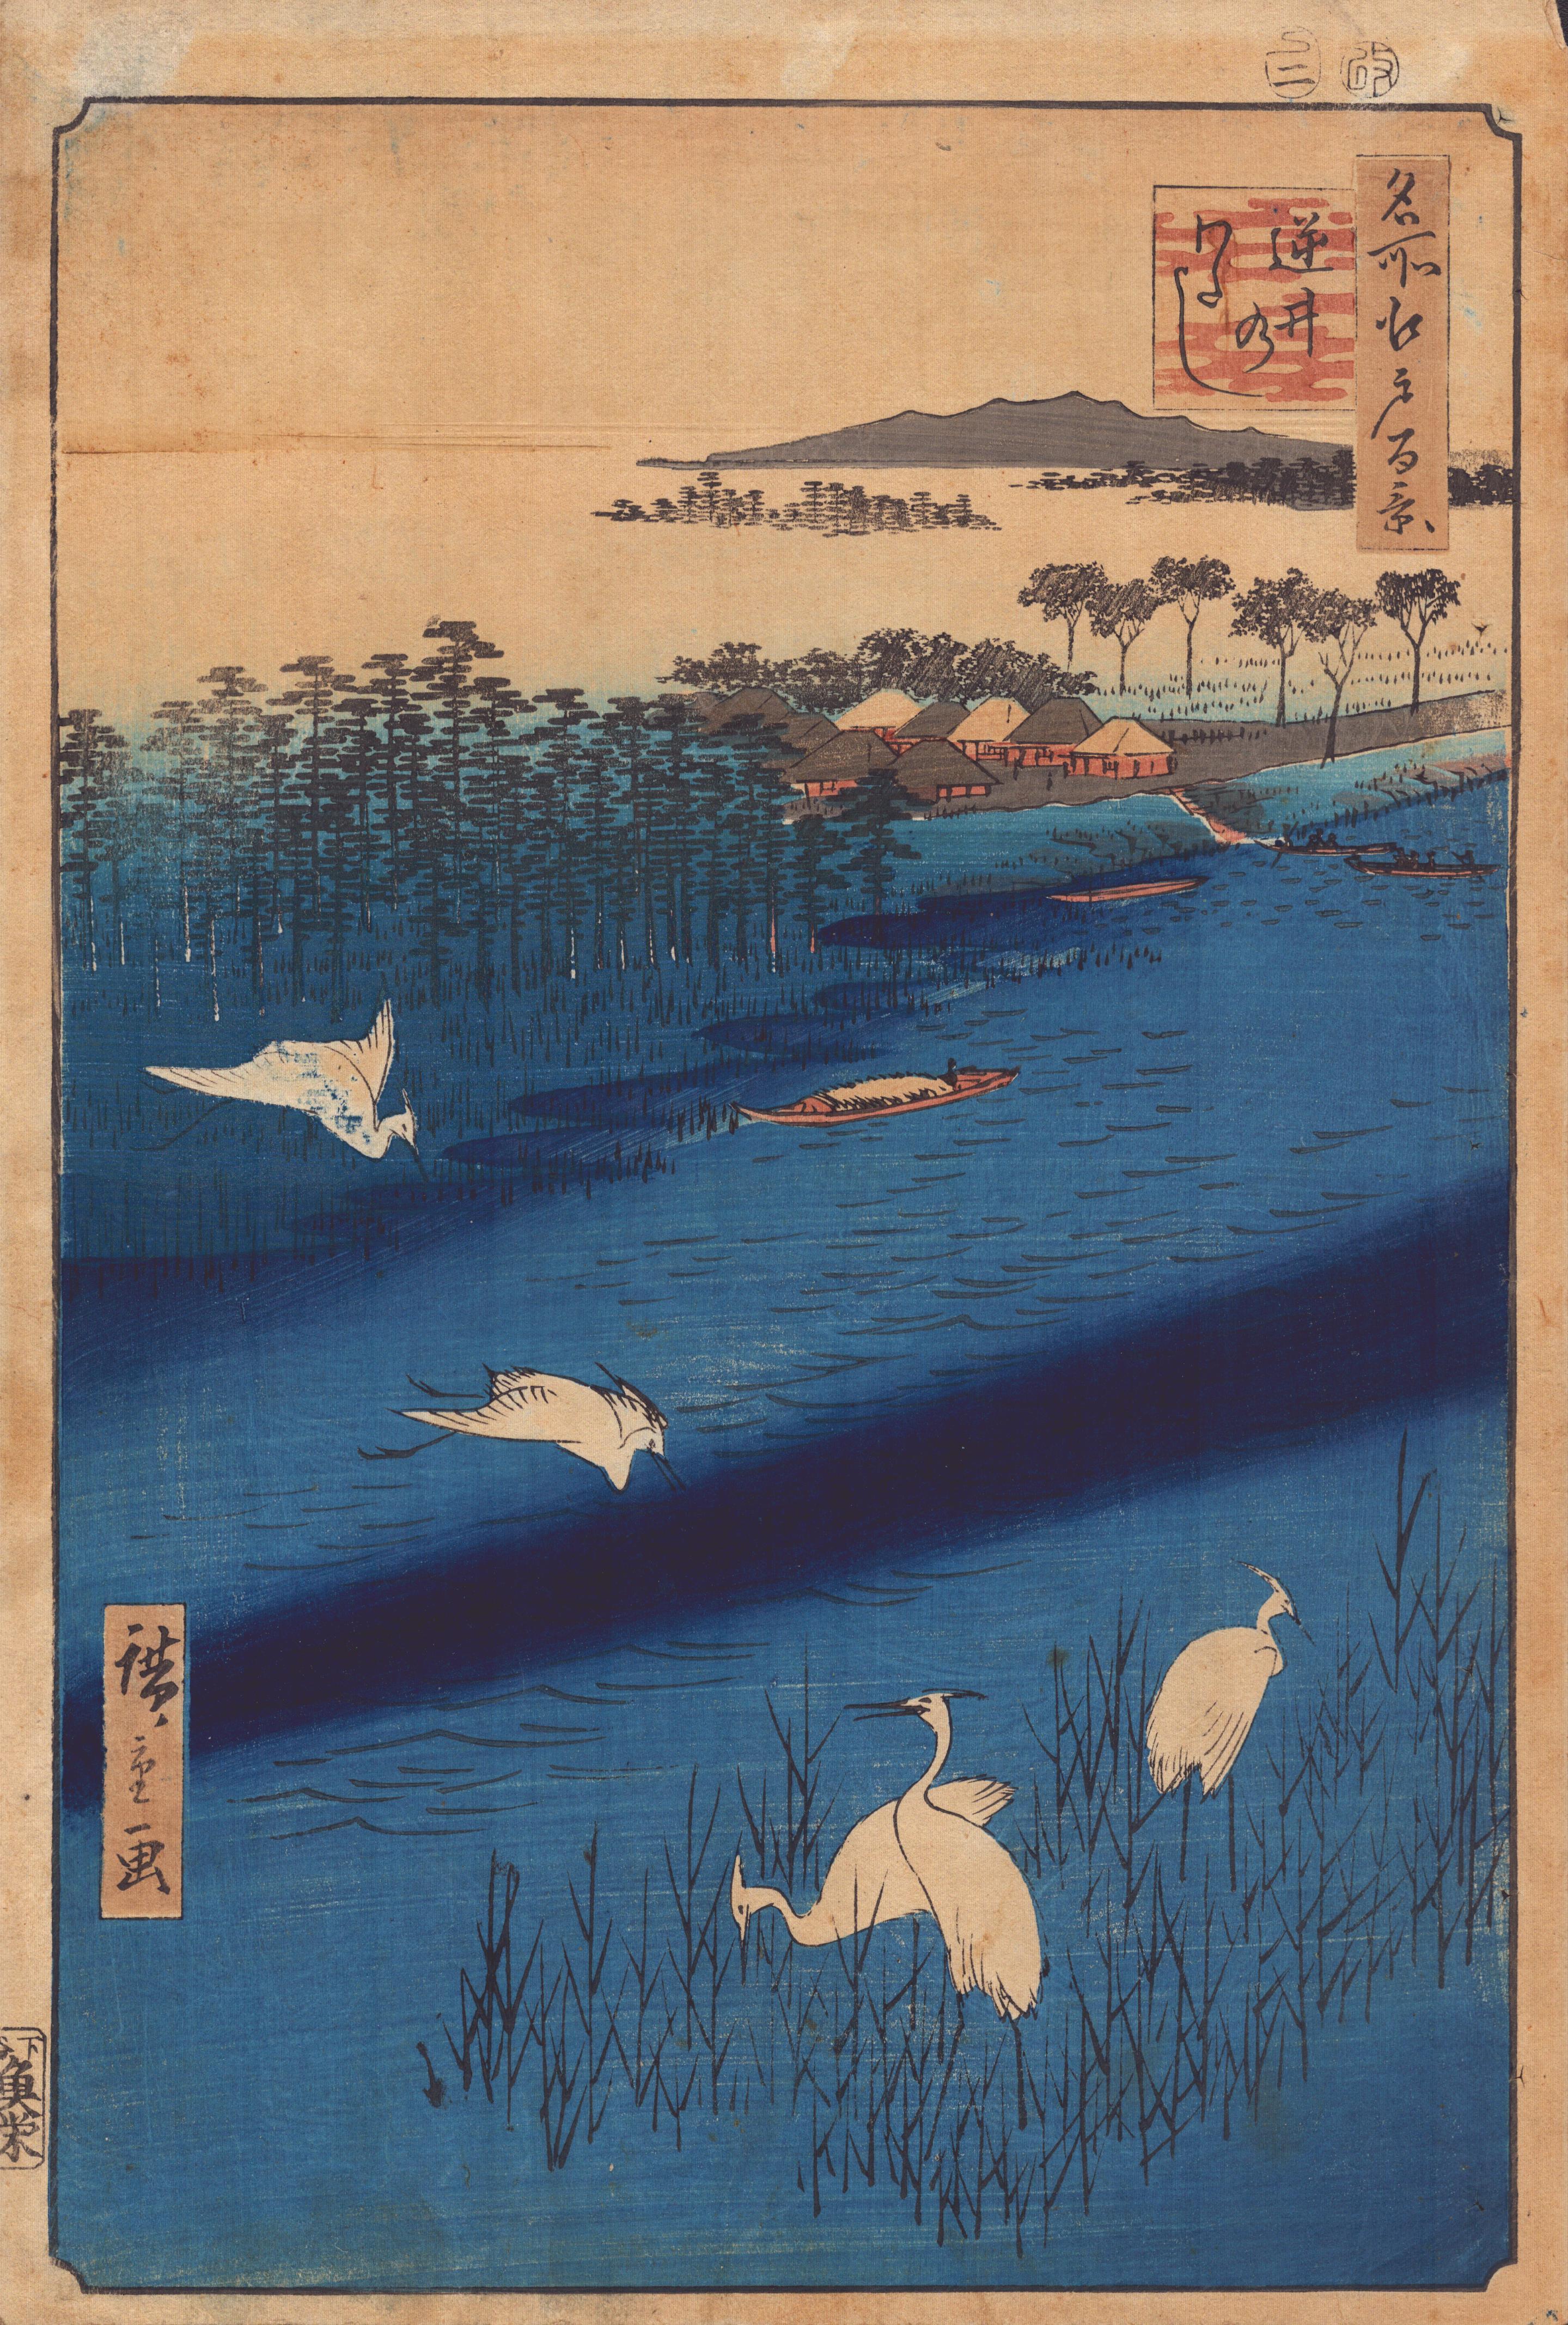 When was Hiroshige born?